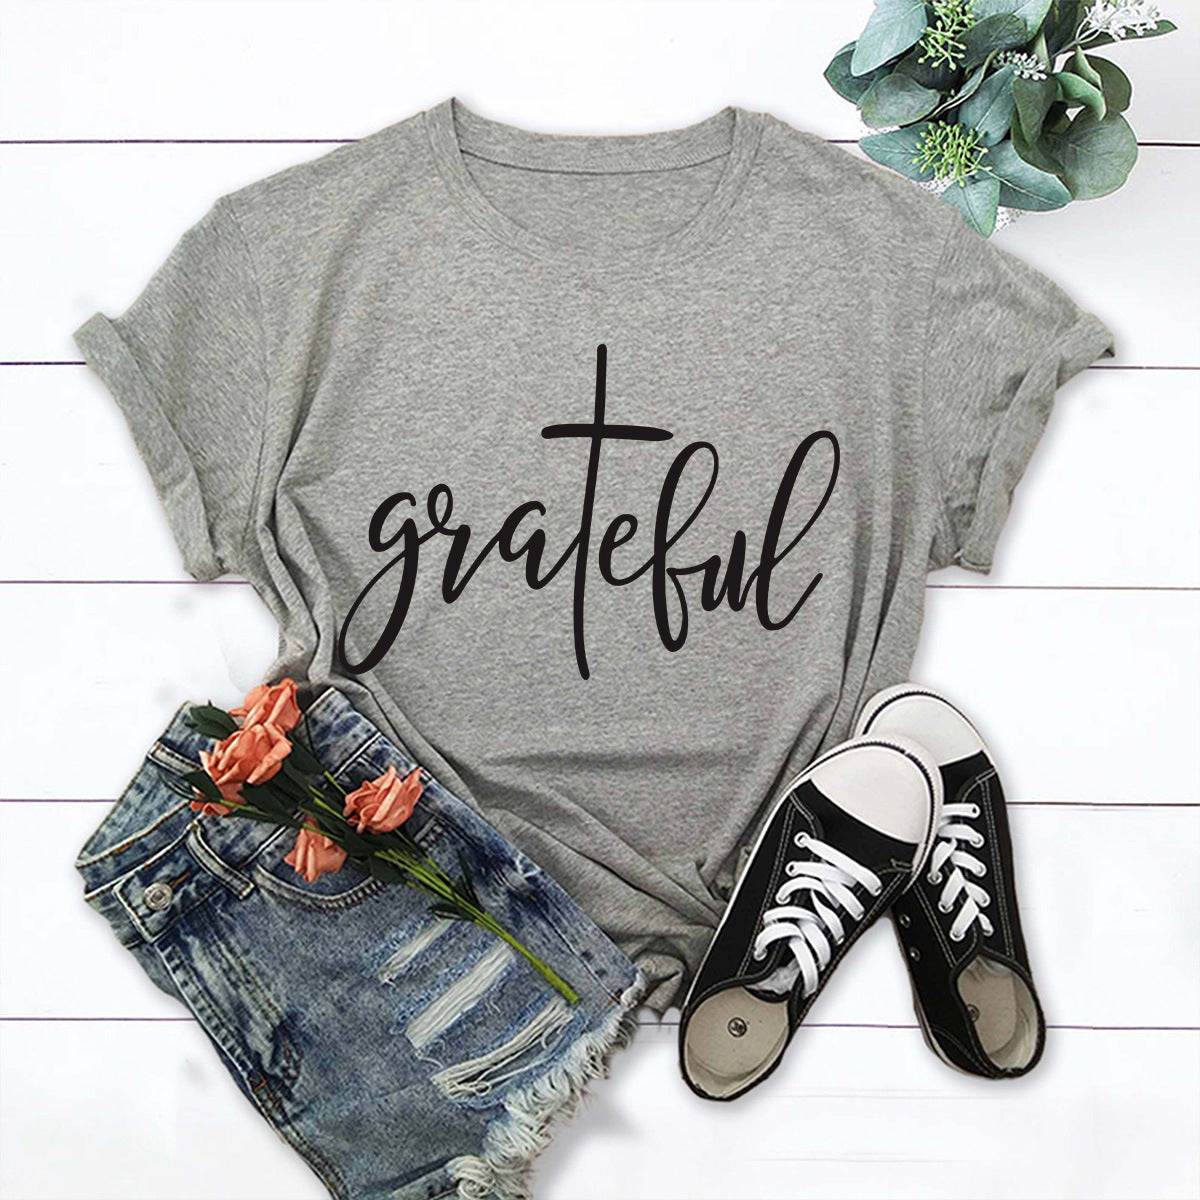 Unisex - Grateful Christian T-shirt